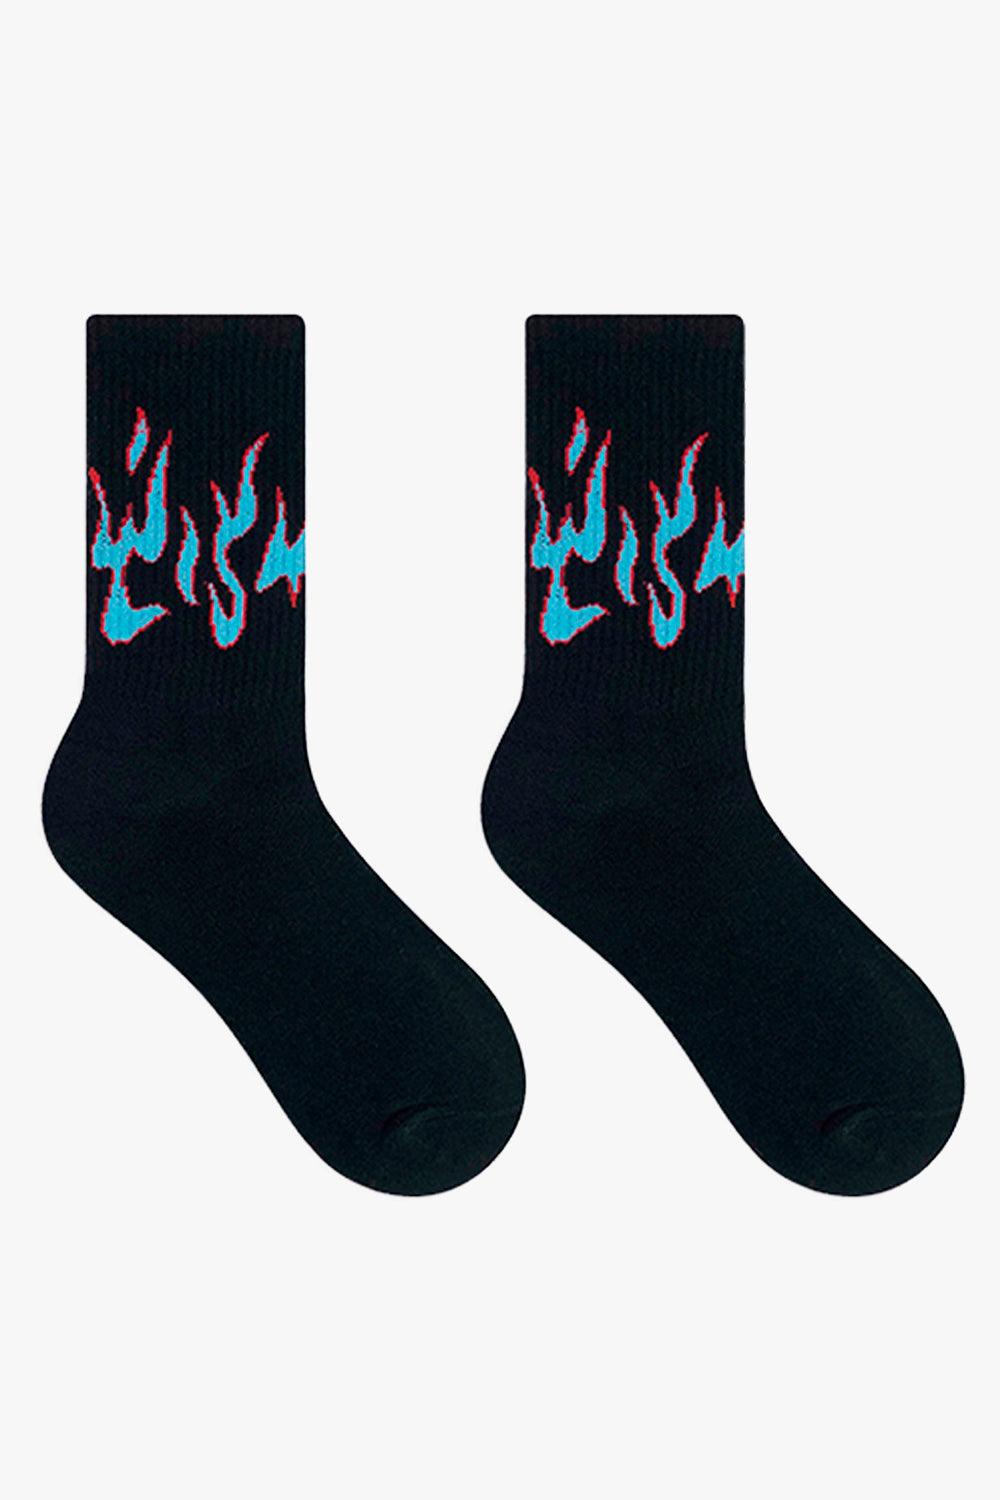 Flame Aesthetic Ankle High Socks